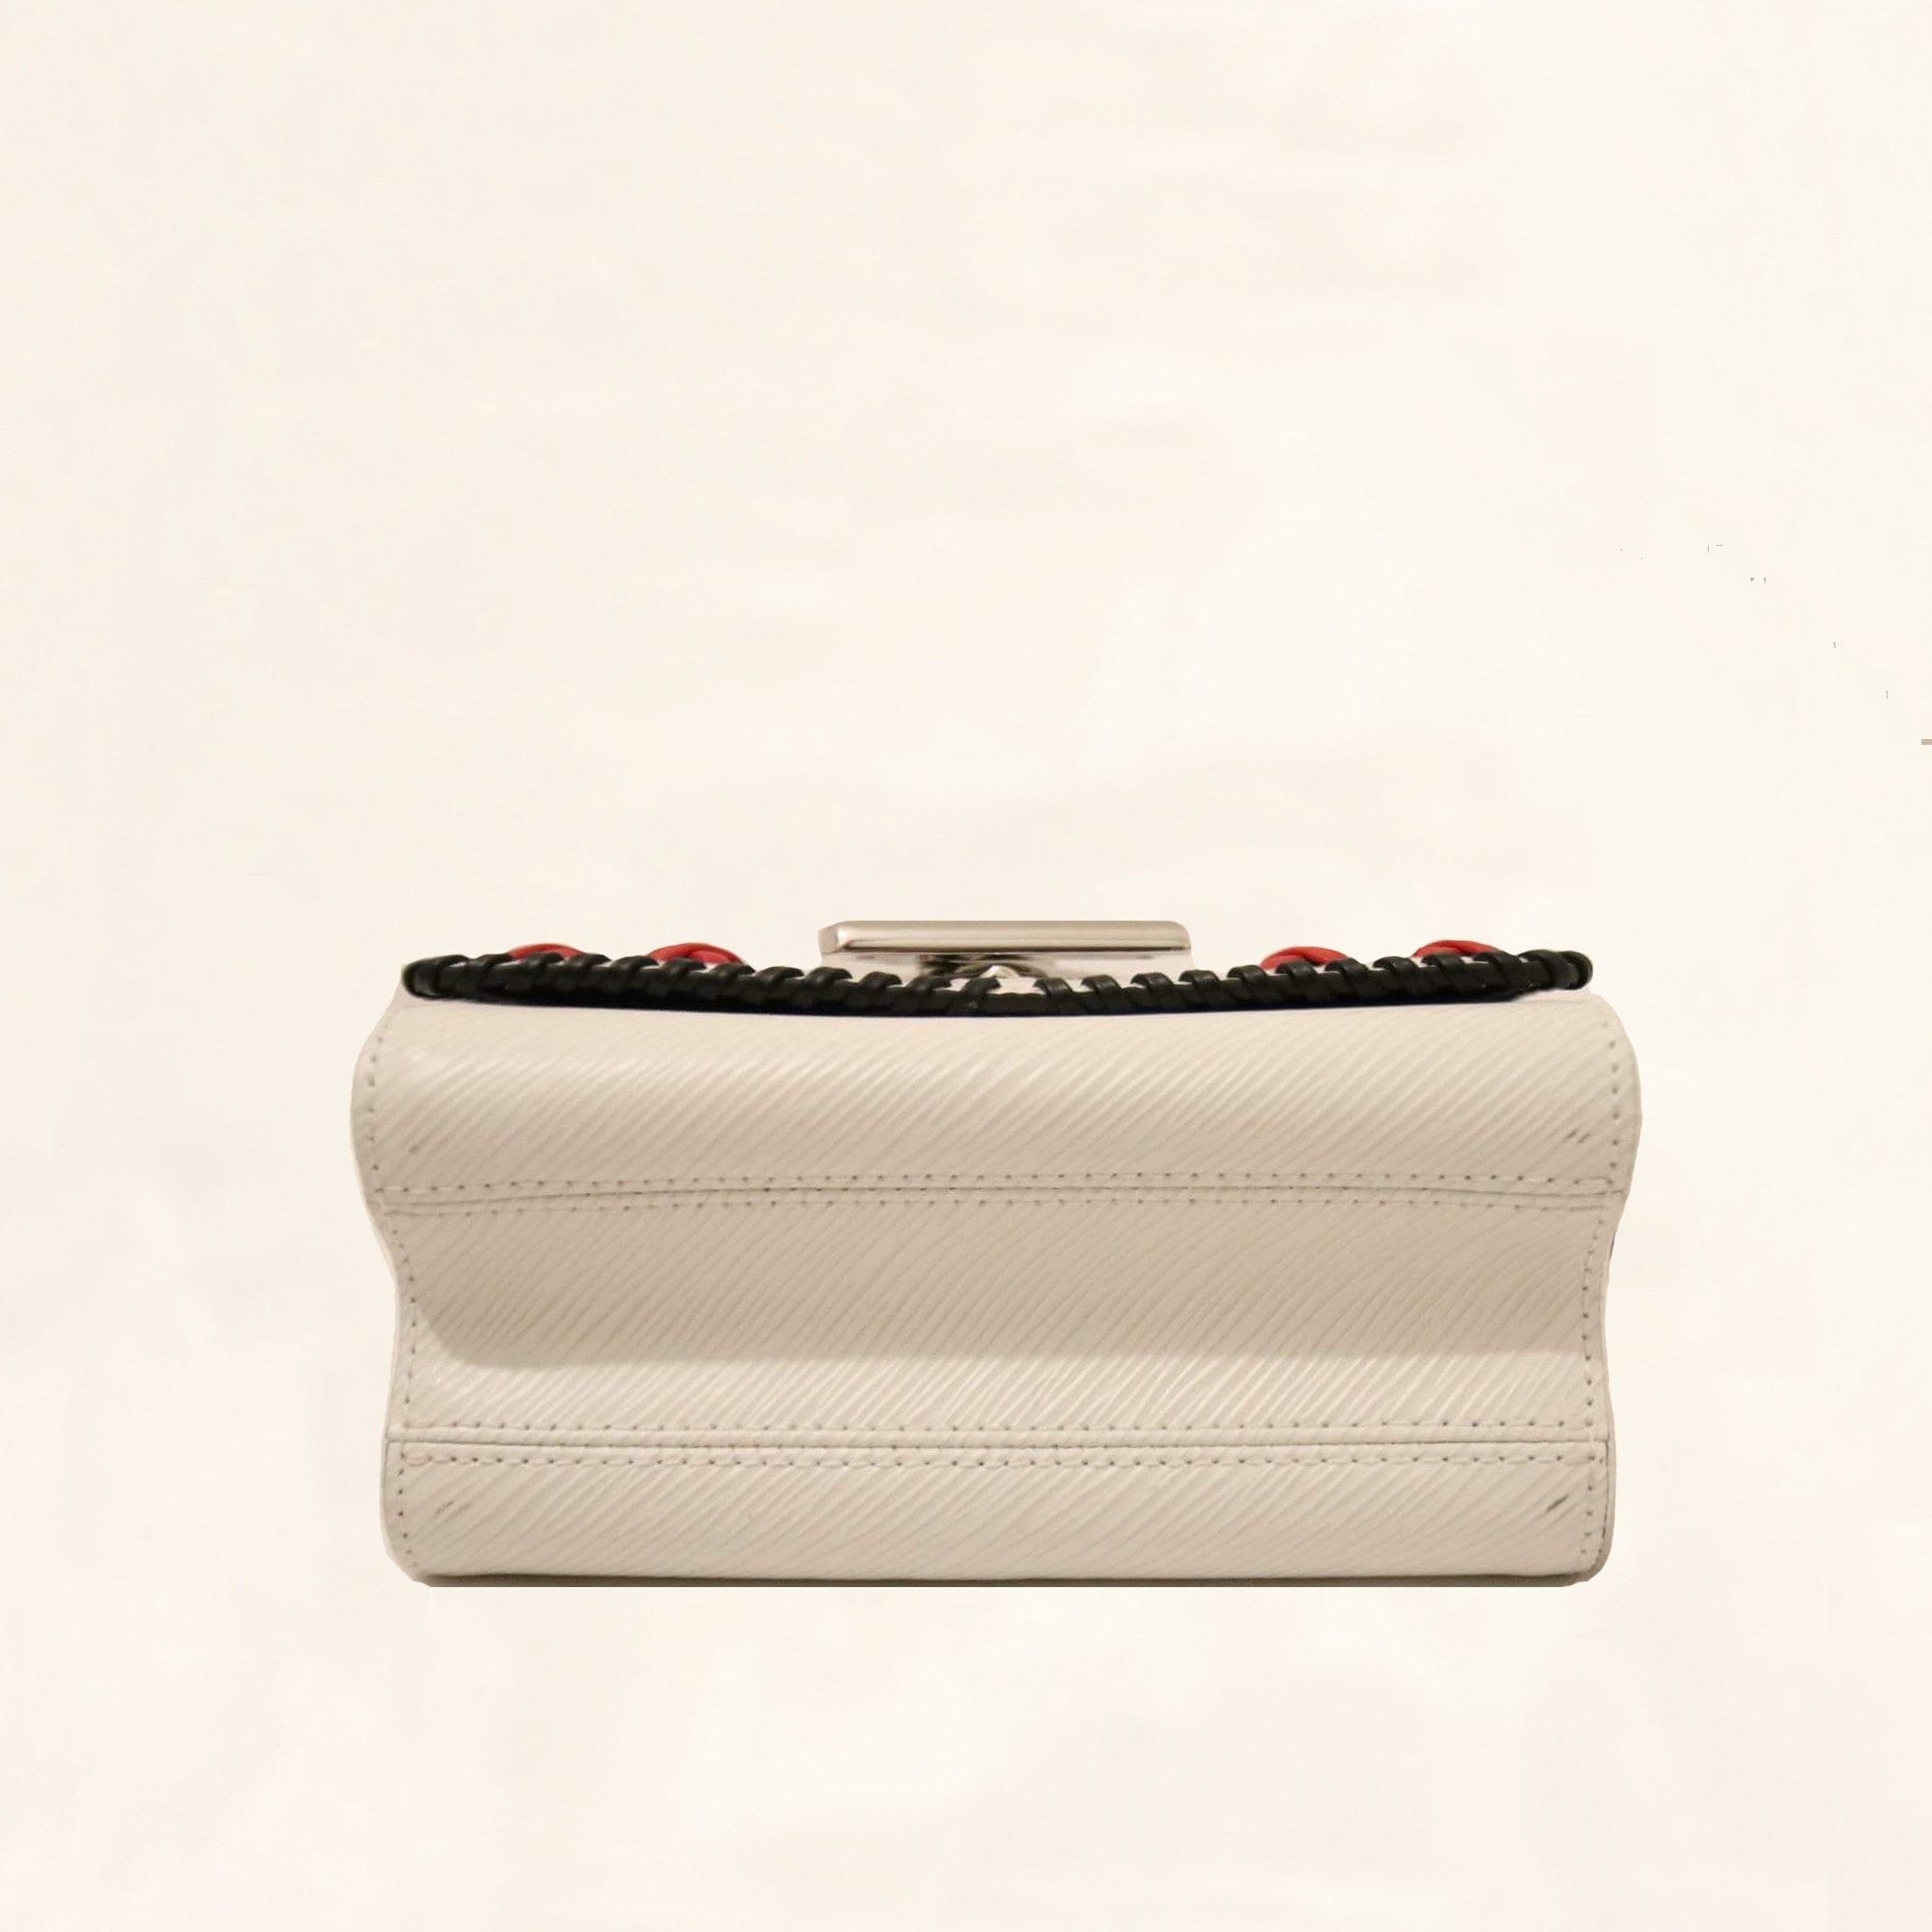 White Louis Vuitton Epi Passy PM Handbag, Cra-wallonieShops Revival